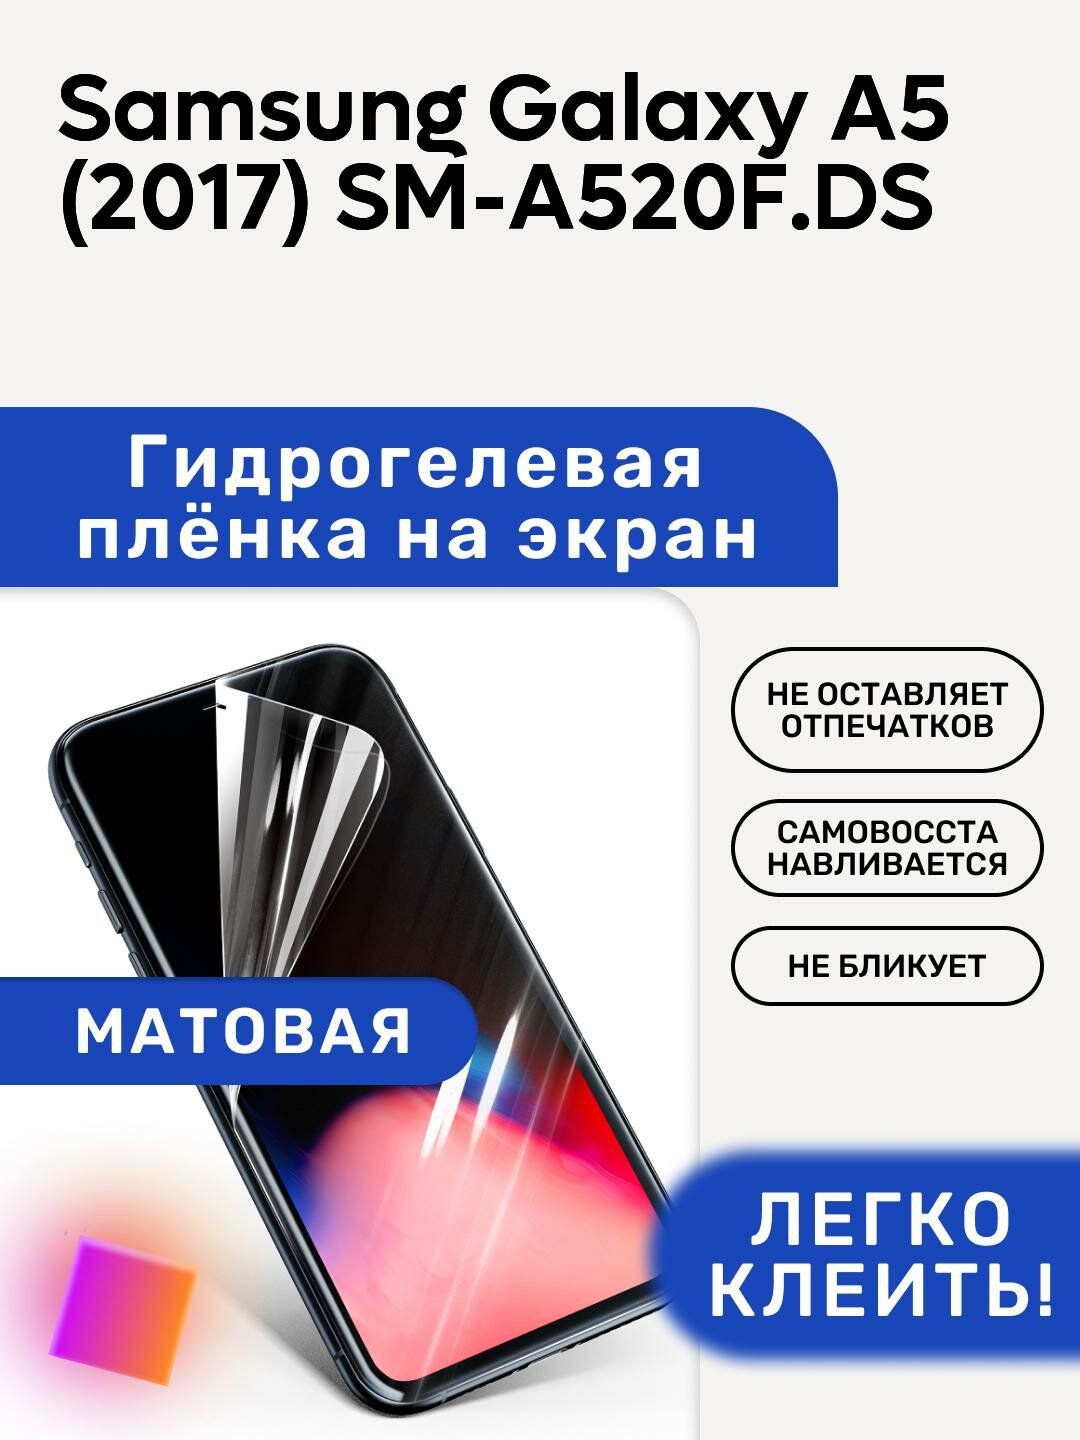 Матовая Гидрогелевая плёнка, полиуретановая, защита экрана Samsung Galaxy A5 (2017) SM-A520F/DS